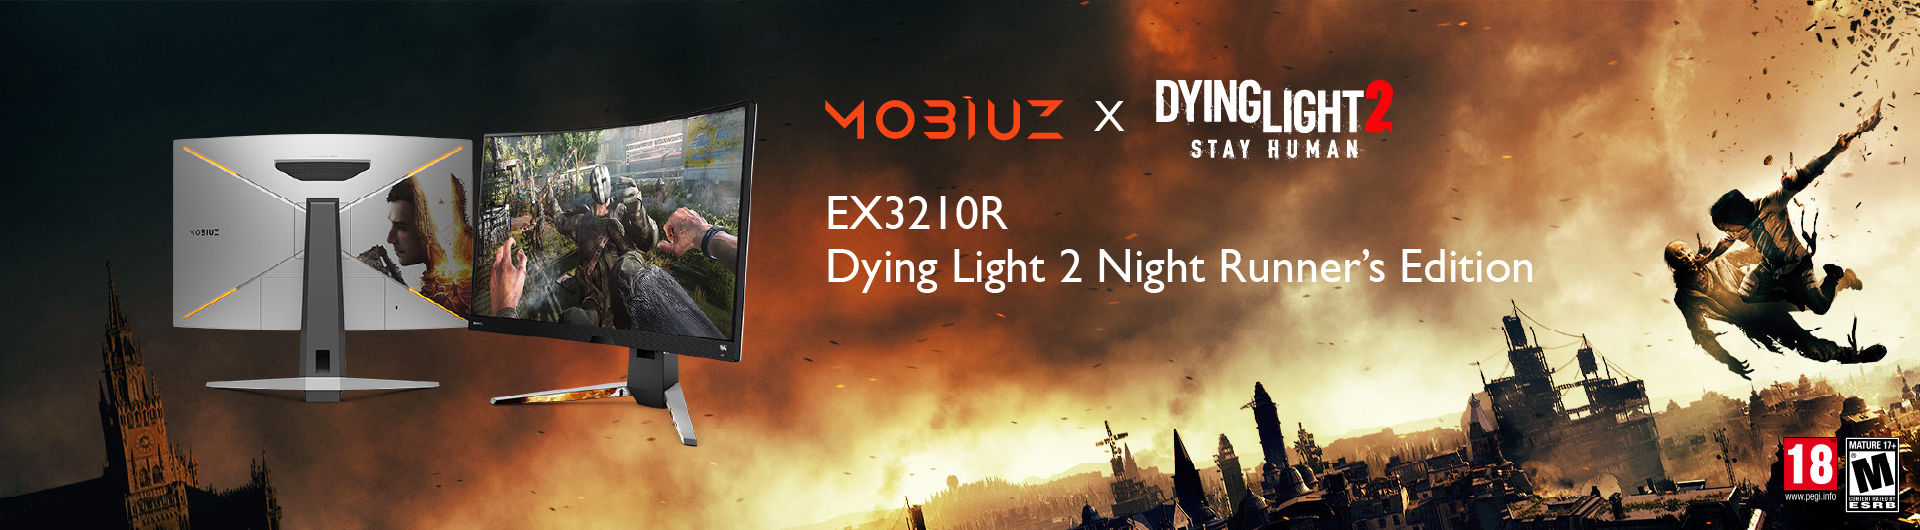 EX3210R x Dying Light 2_Banner